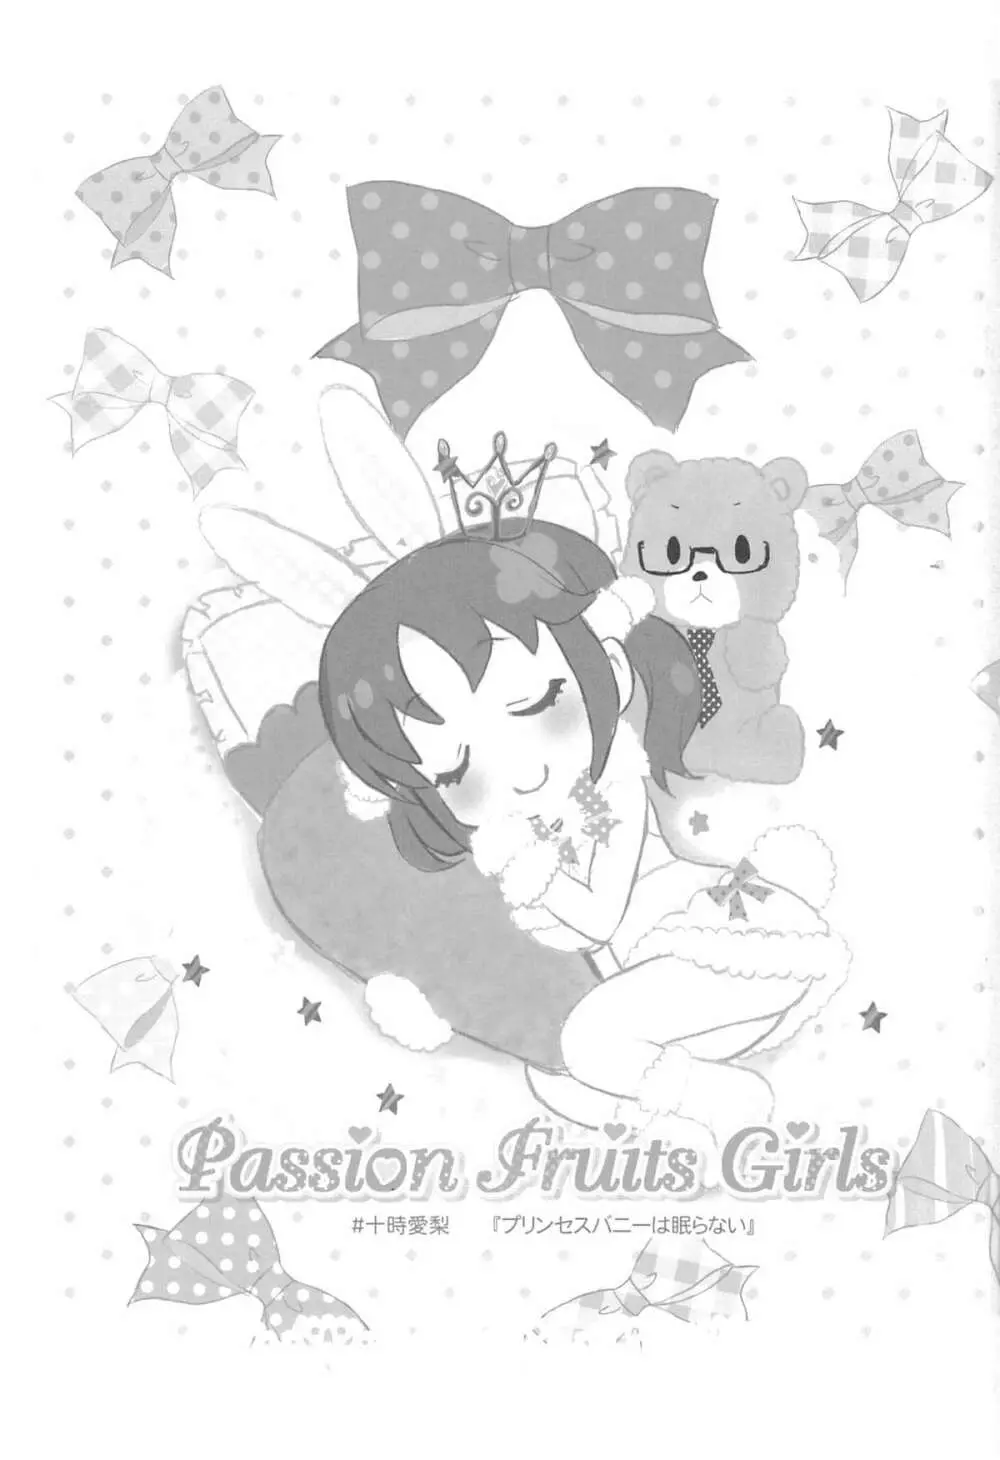 Passion Fruit Girls #十時愛梨 プリンセスバニーは眠らない。 2ページ